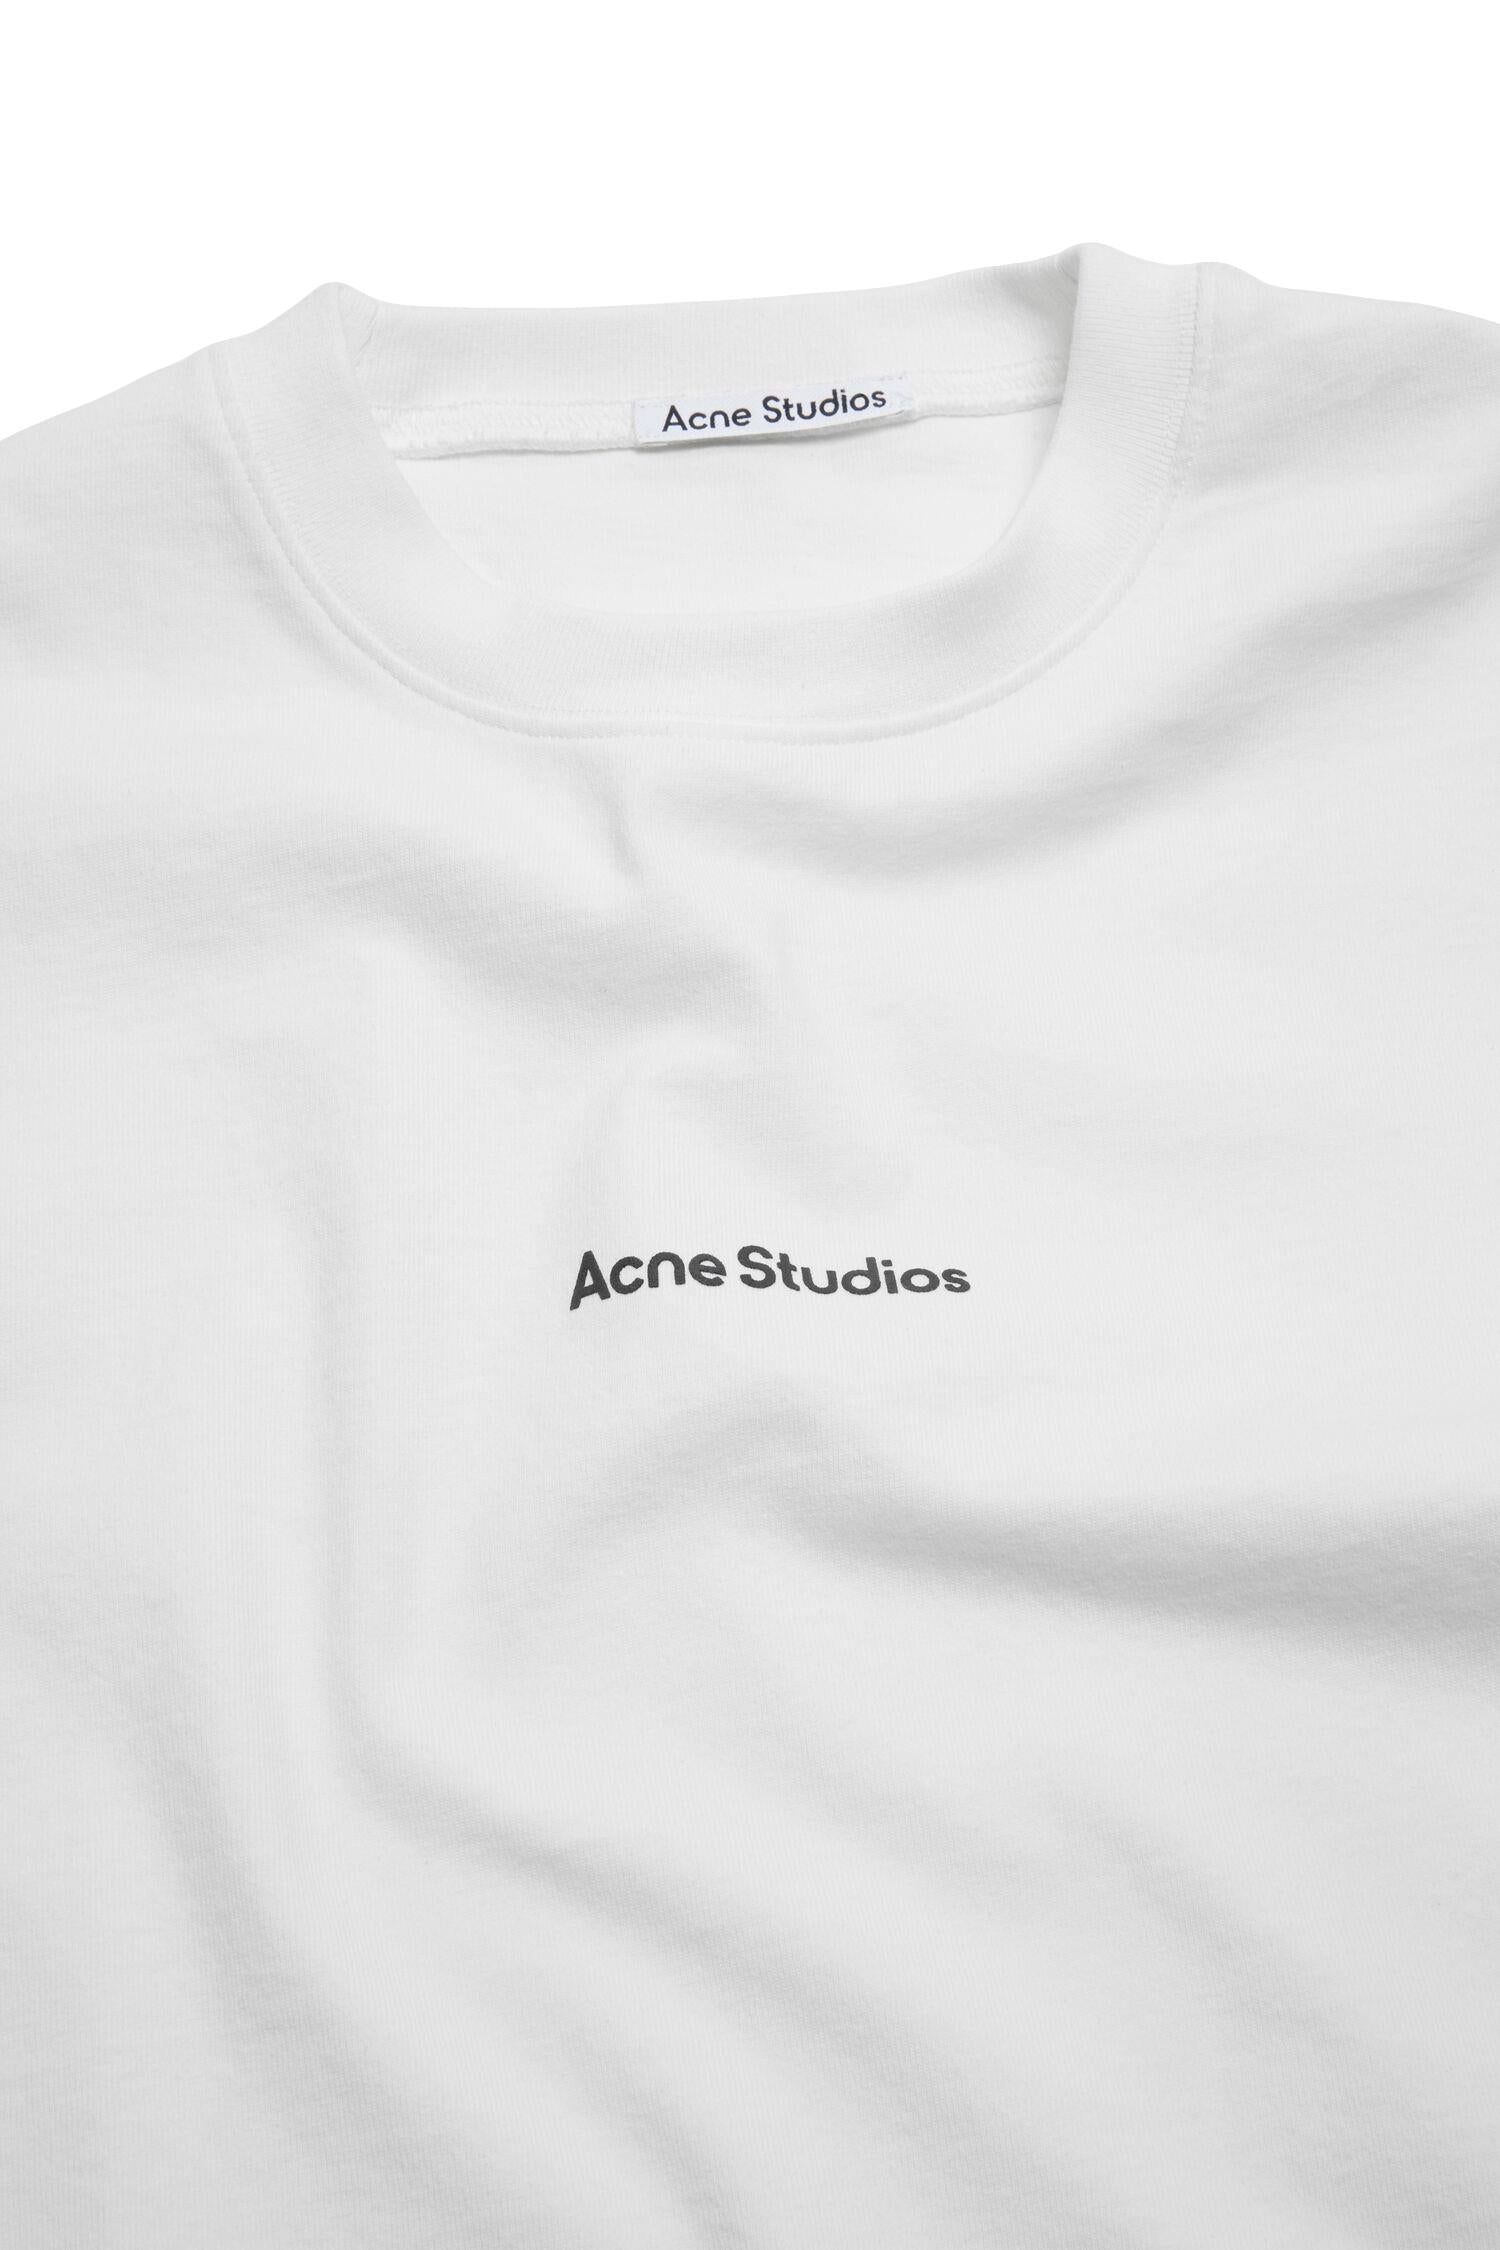 Acne New Logo Tee T-shirt Melkehvit - modostore.no